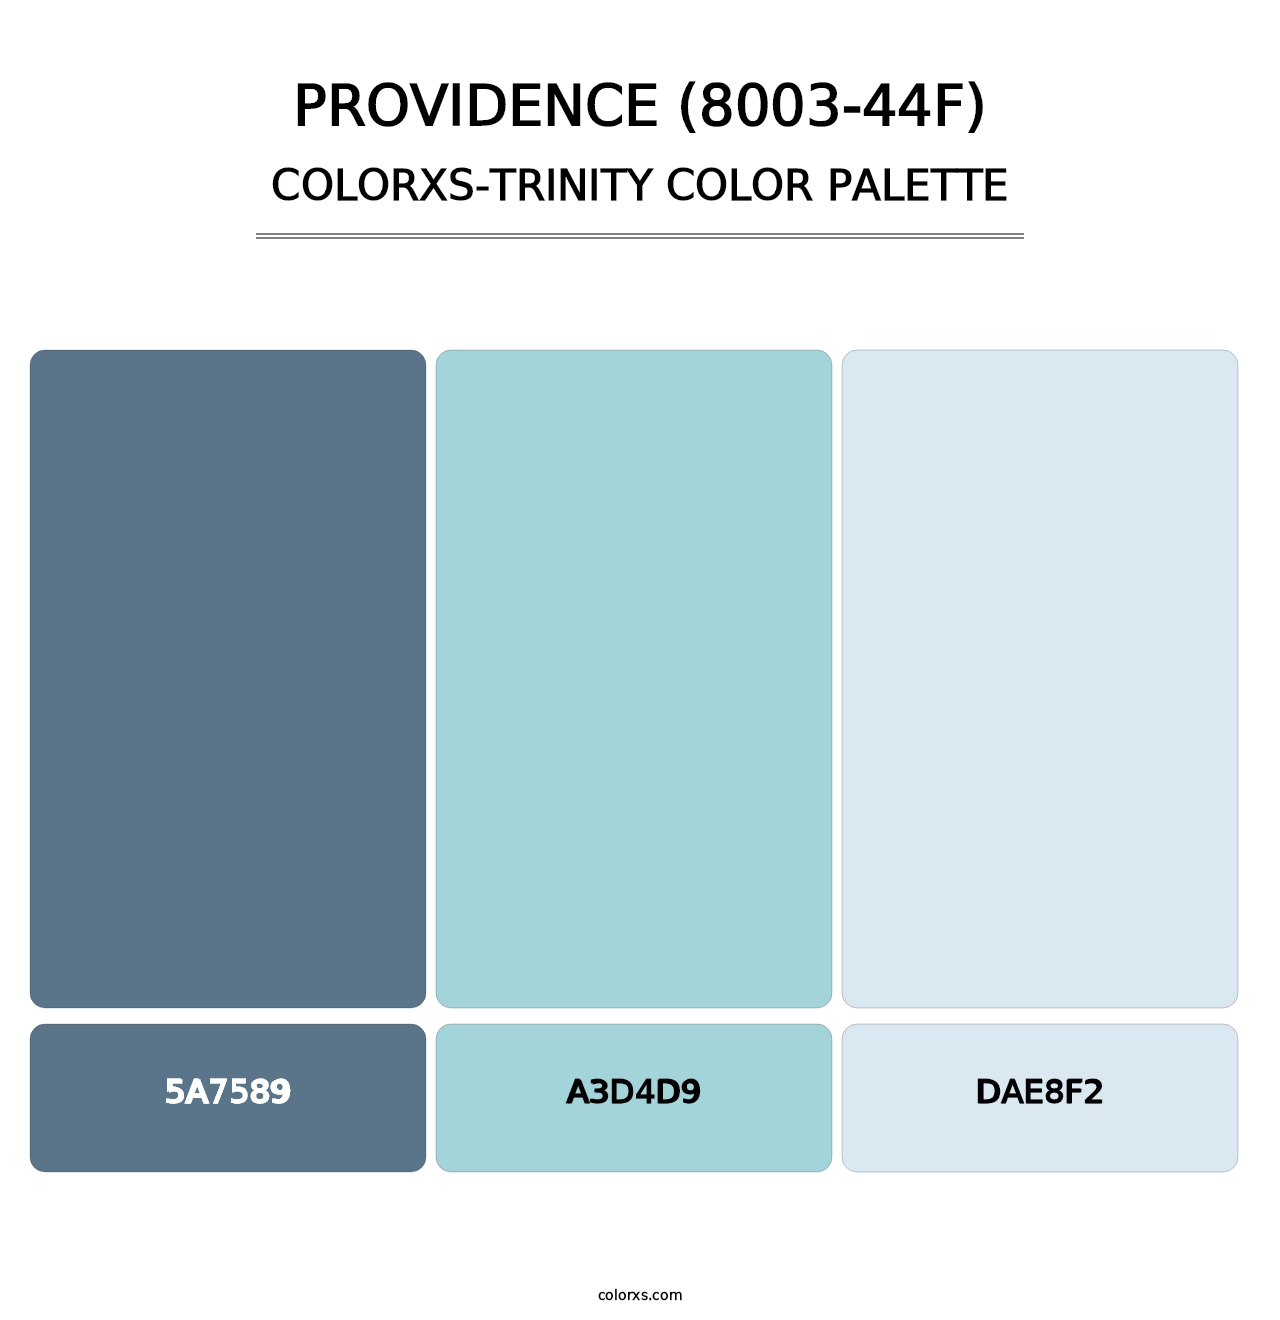 Providence (8003-44F) - Colorxs Trinity Palette